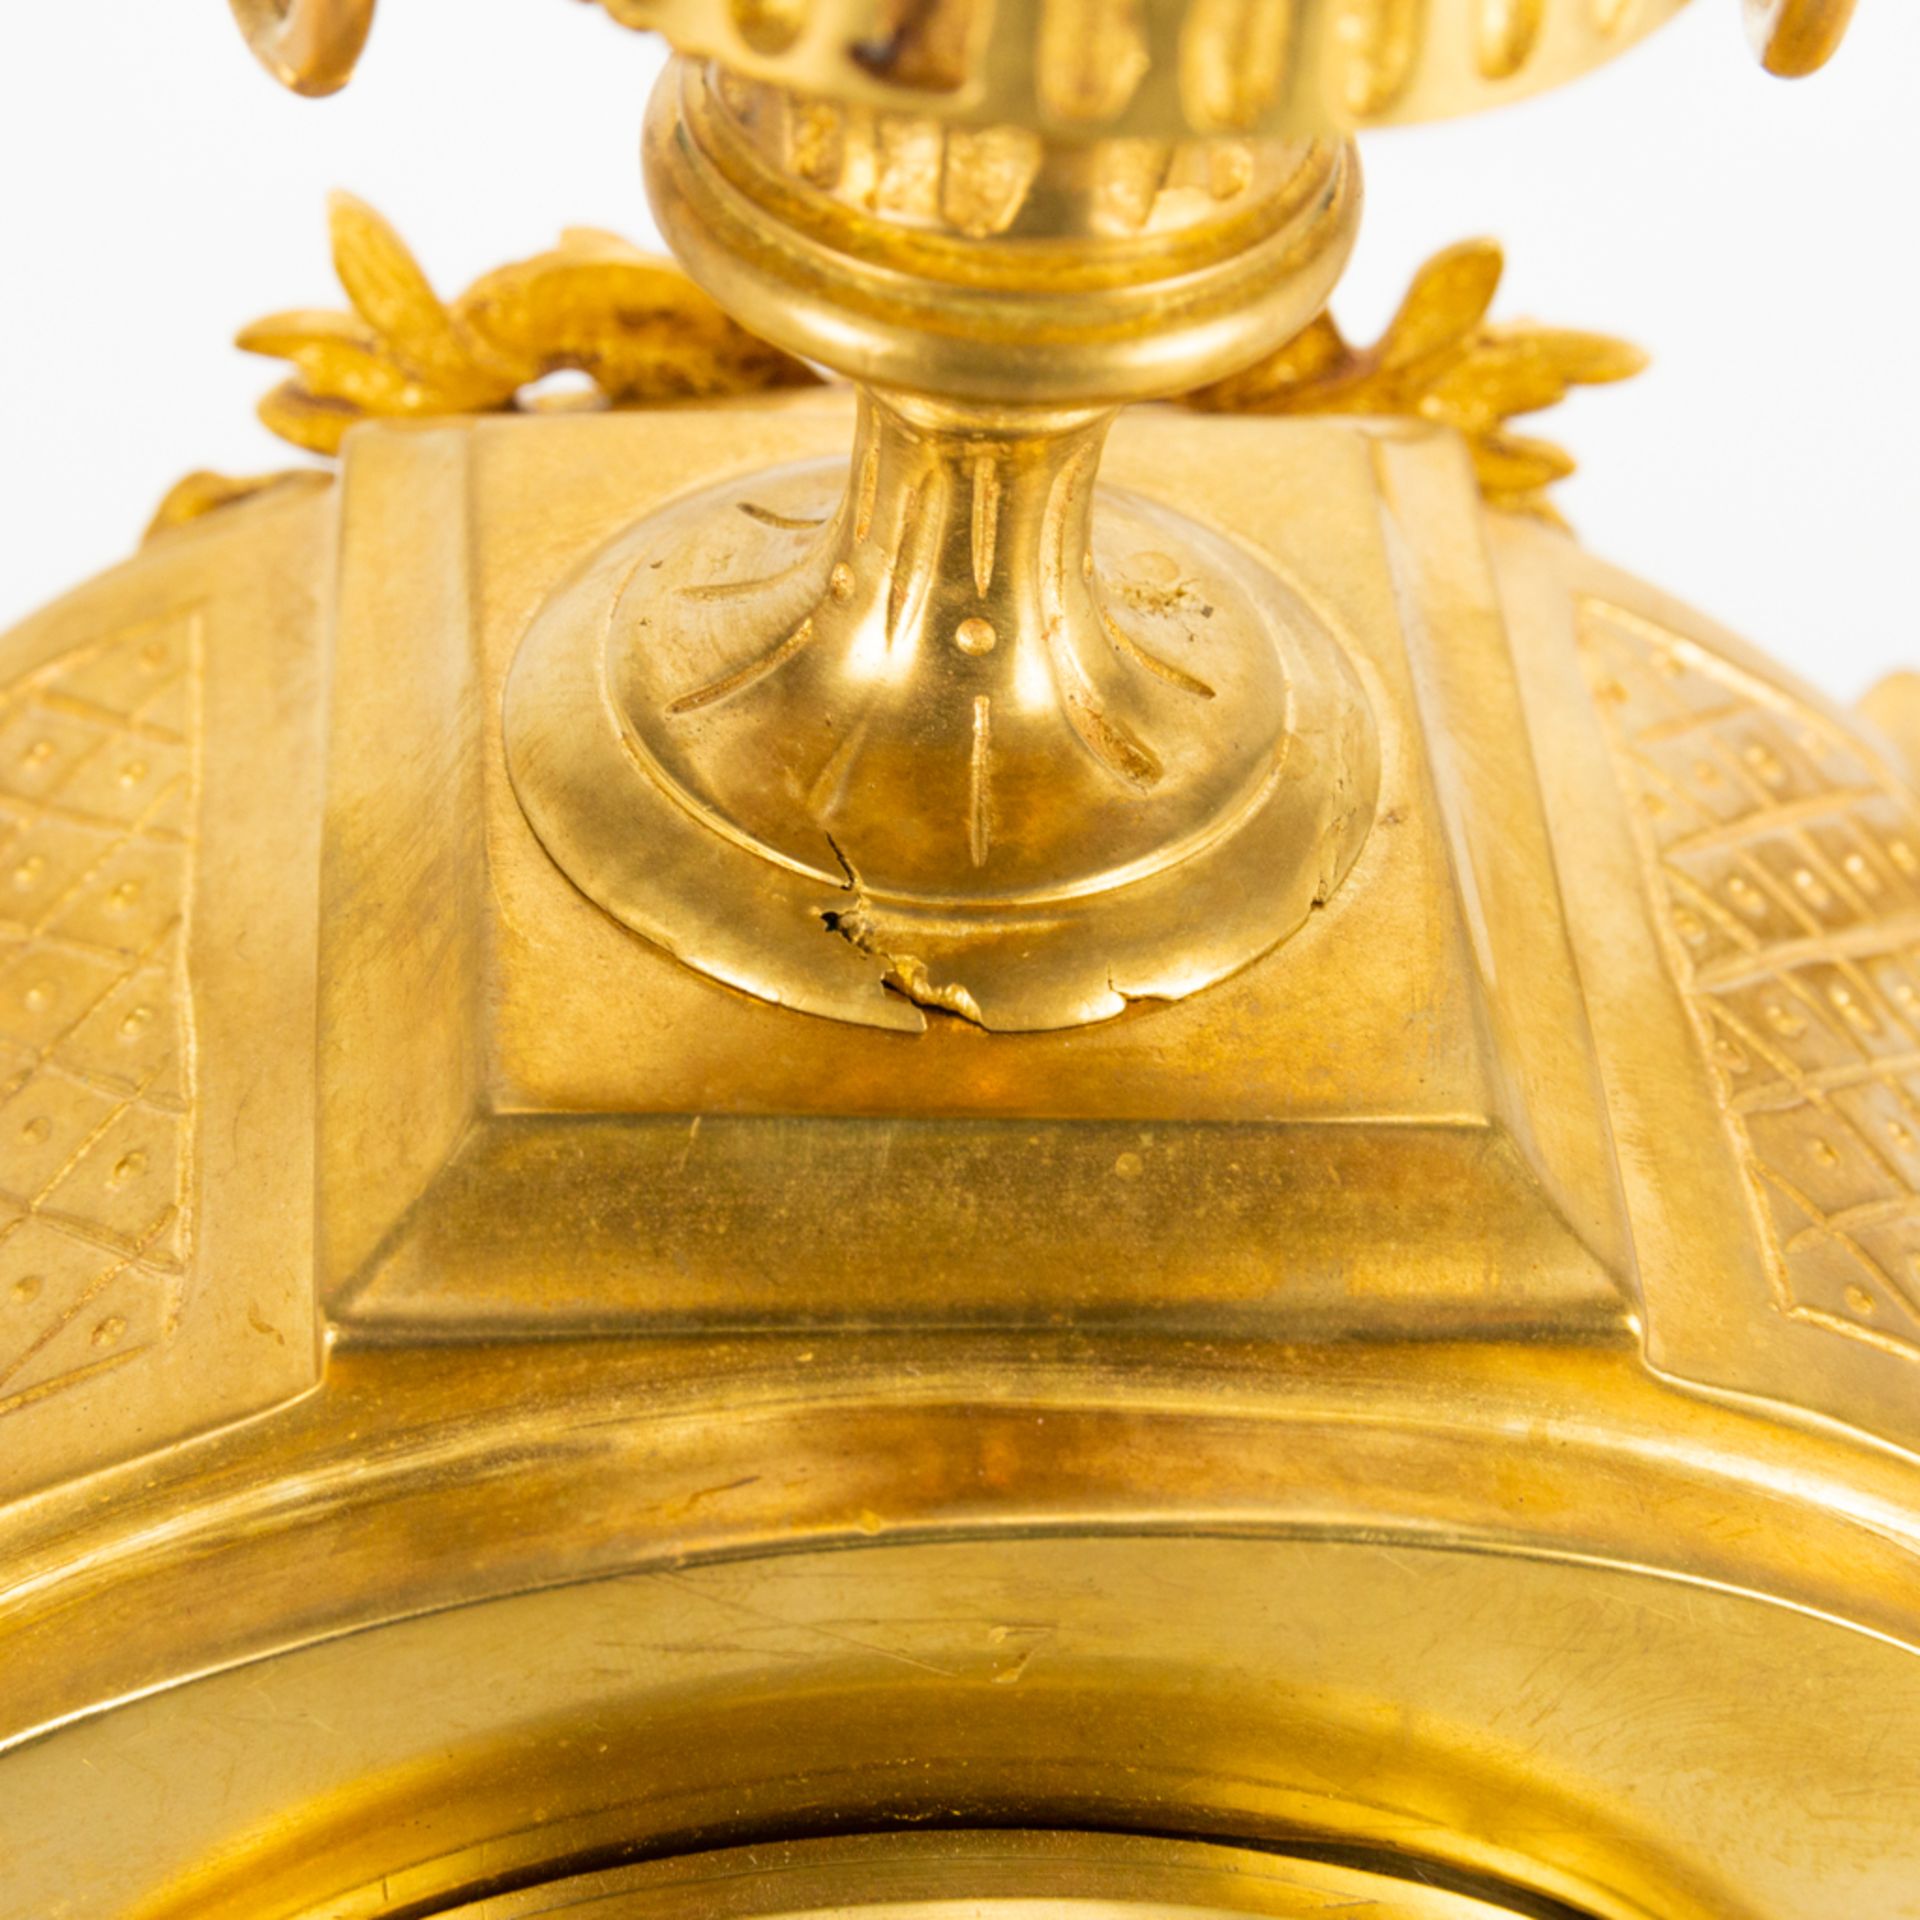 A ormolu gilt table clock made of bronze. 19th century. (10 x 17 x 31 cm) - Image 12 of 16